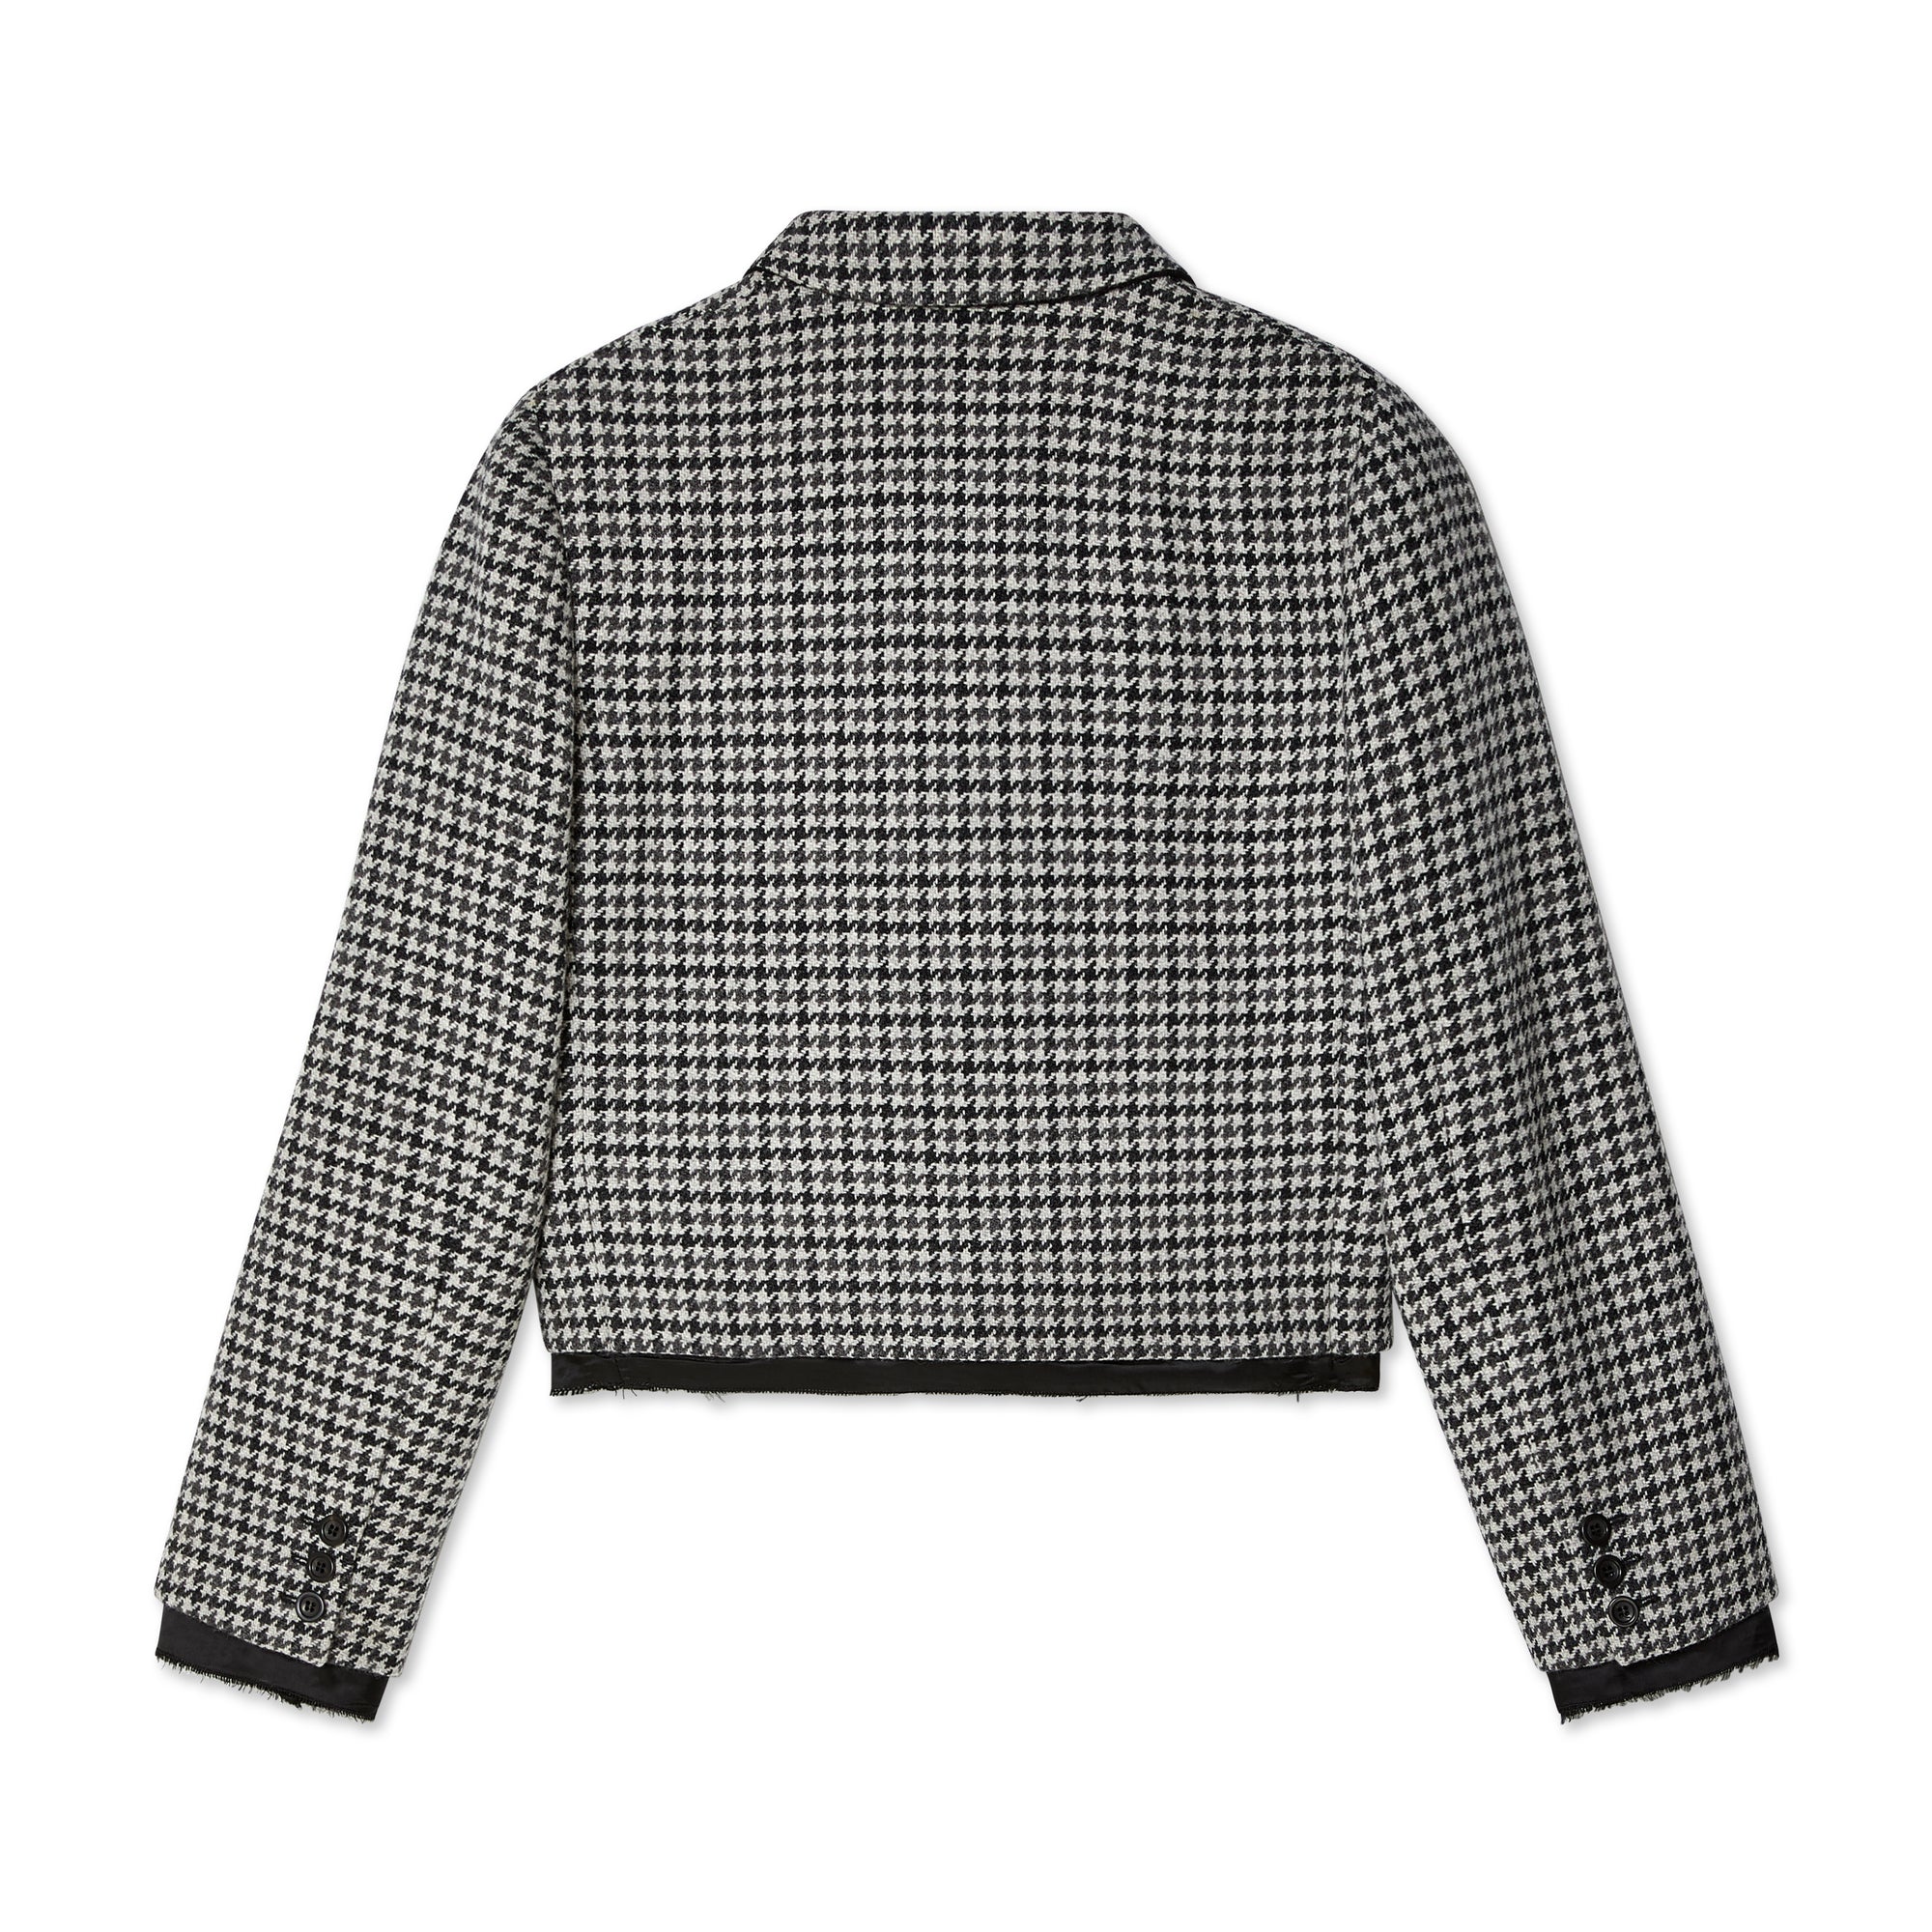 Miu Miu - Women's Cropped Check Jacket - (Grey/Black) view 2